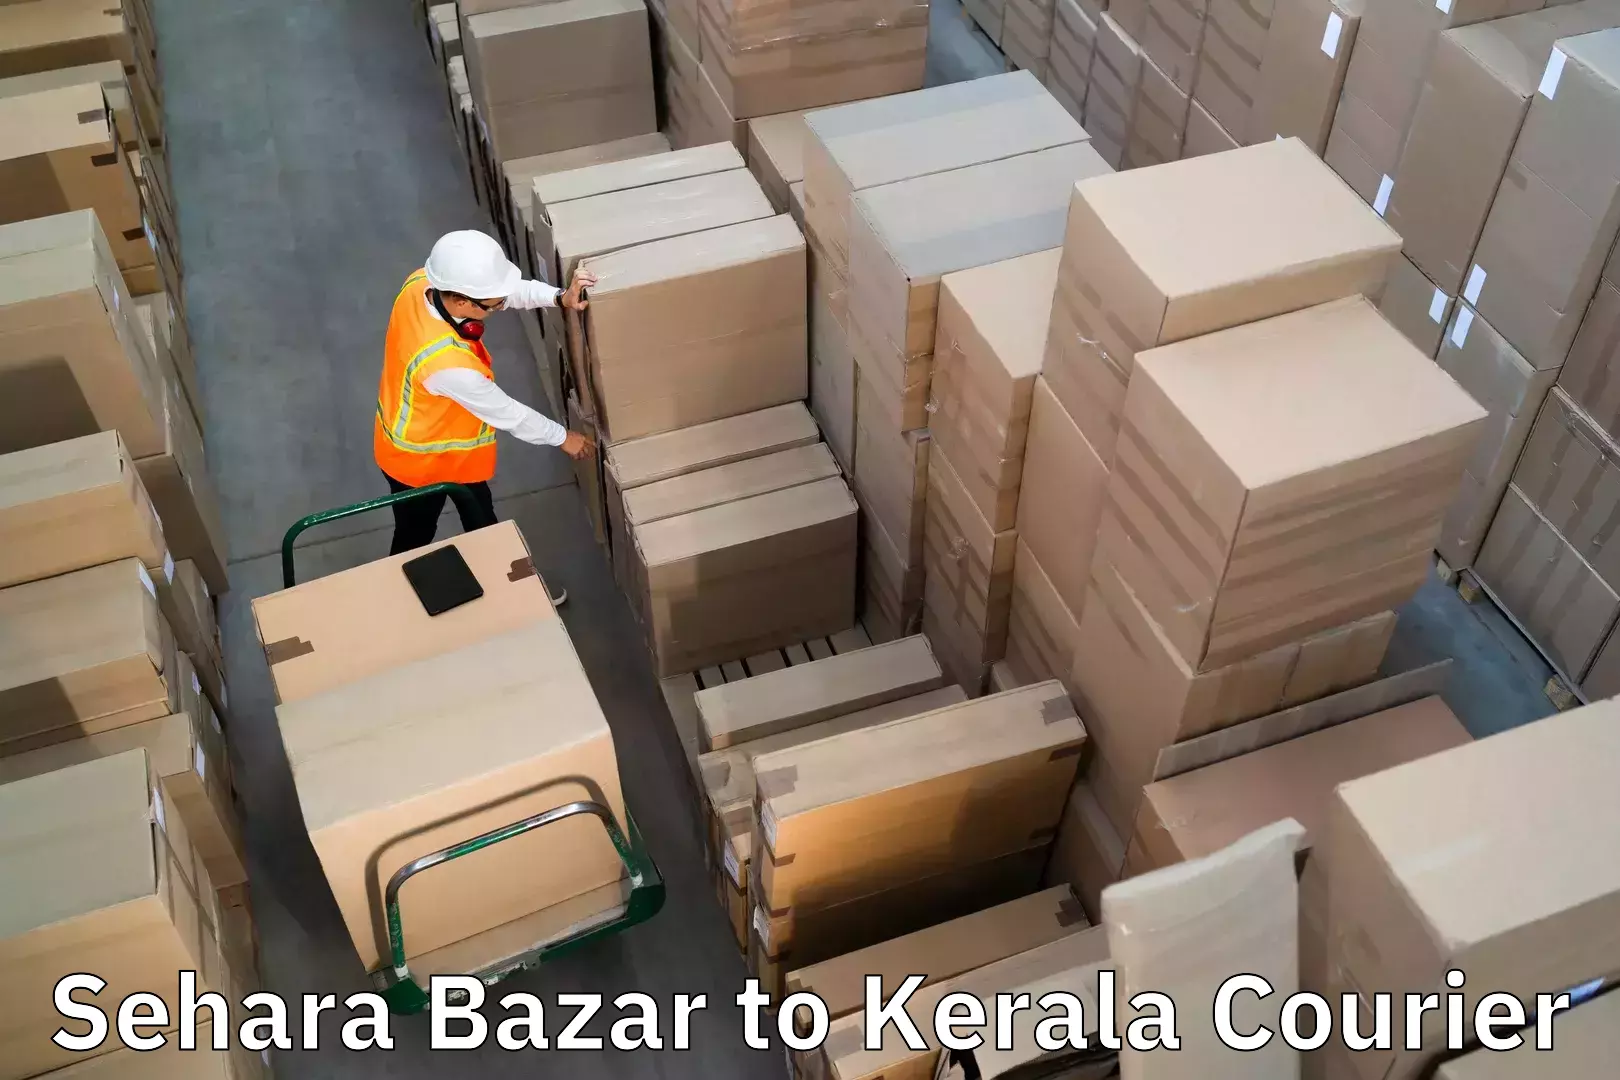 International baggage delivery in Sehara Bazar to Palai